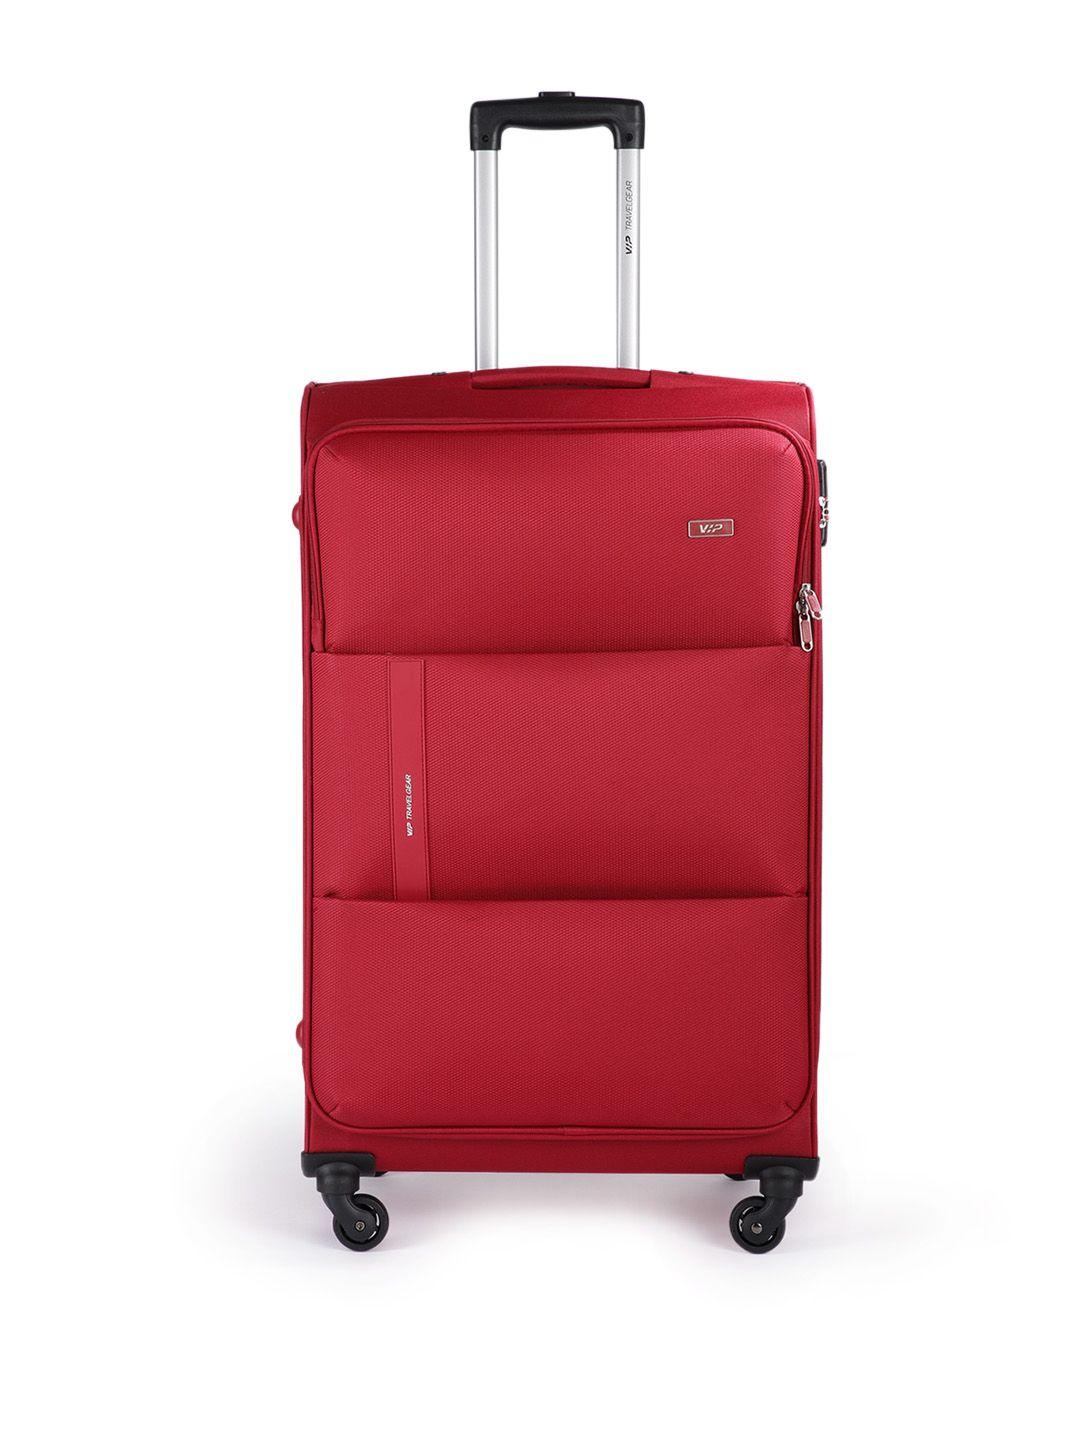 vip-unisex-red-large-widget-str-trolley-suitcase